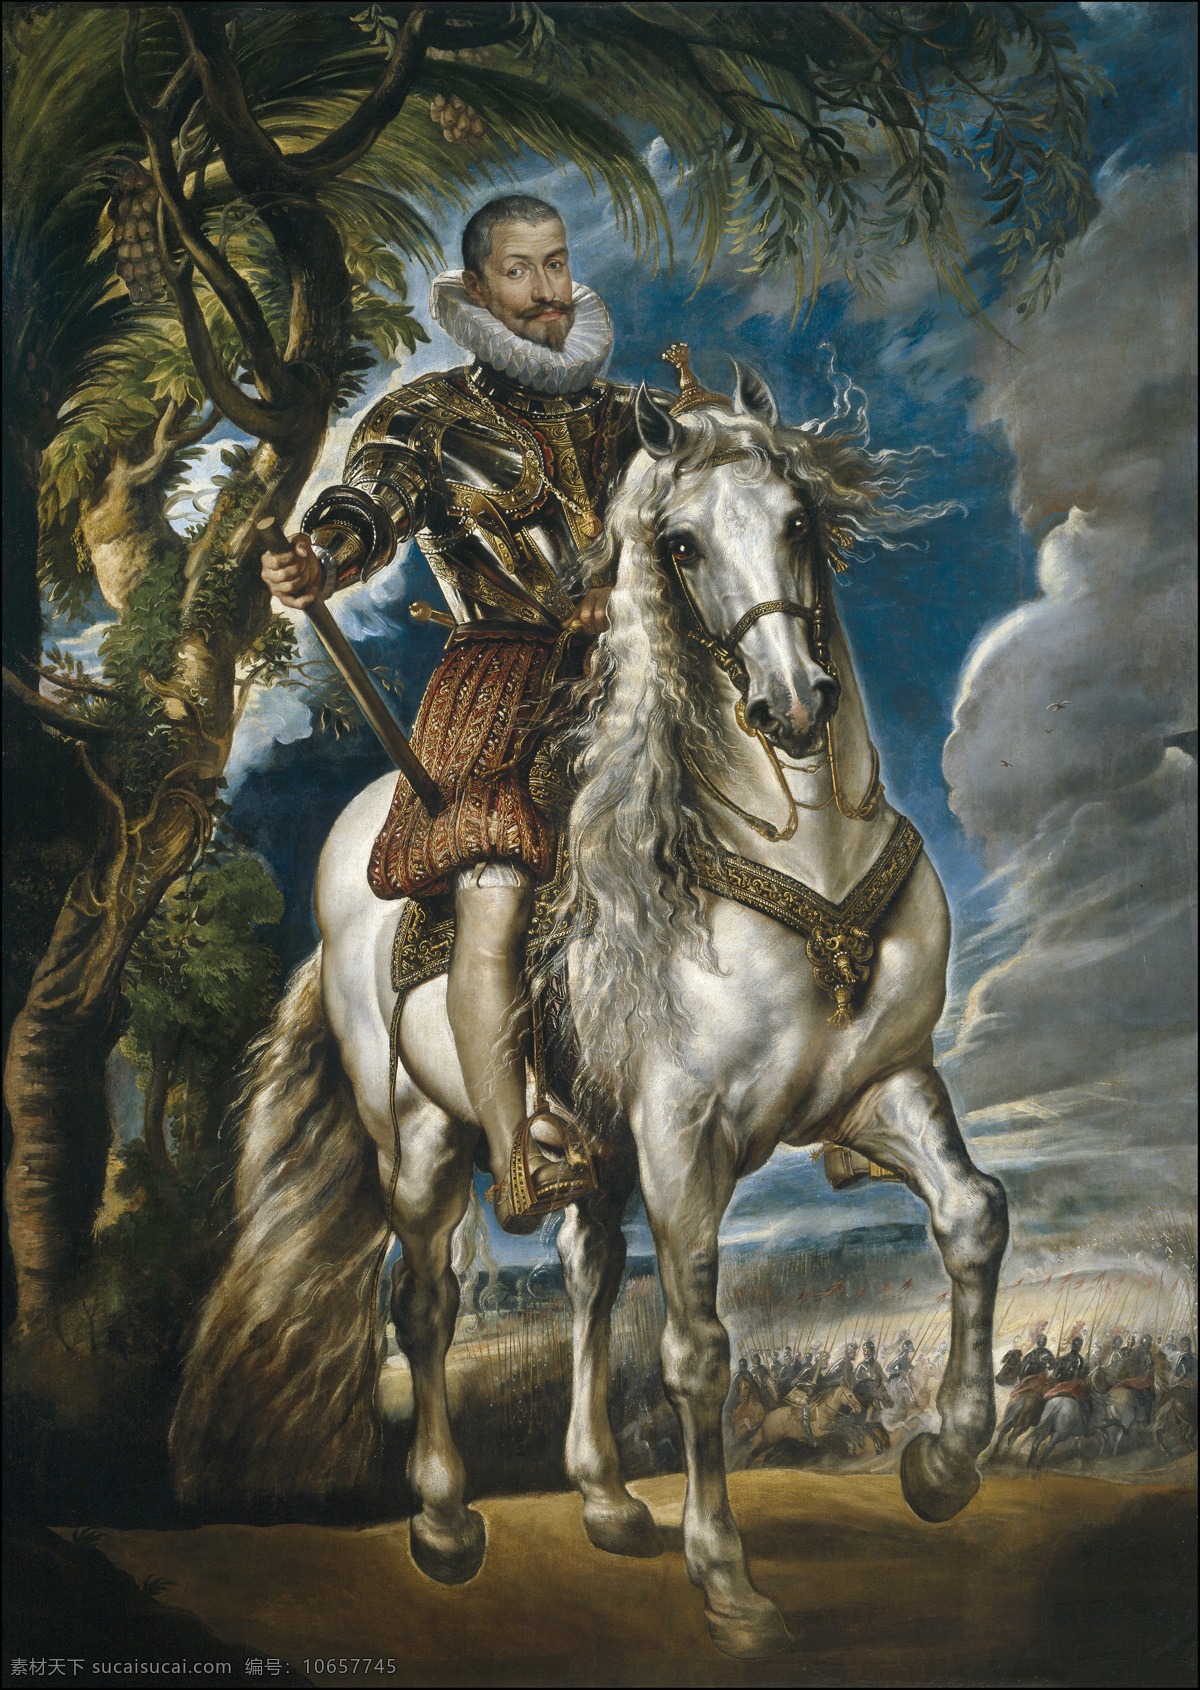 rubens 宫廷 人物 人 paul 德国 画家 彼得保罗 鲁本斯 peter lerma duke the of portrait equestrian